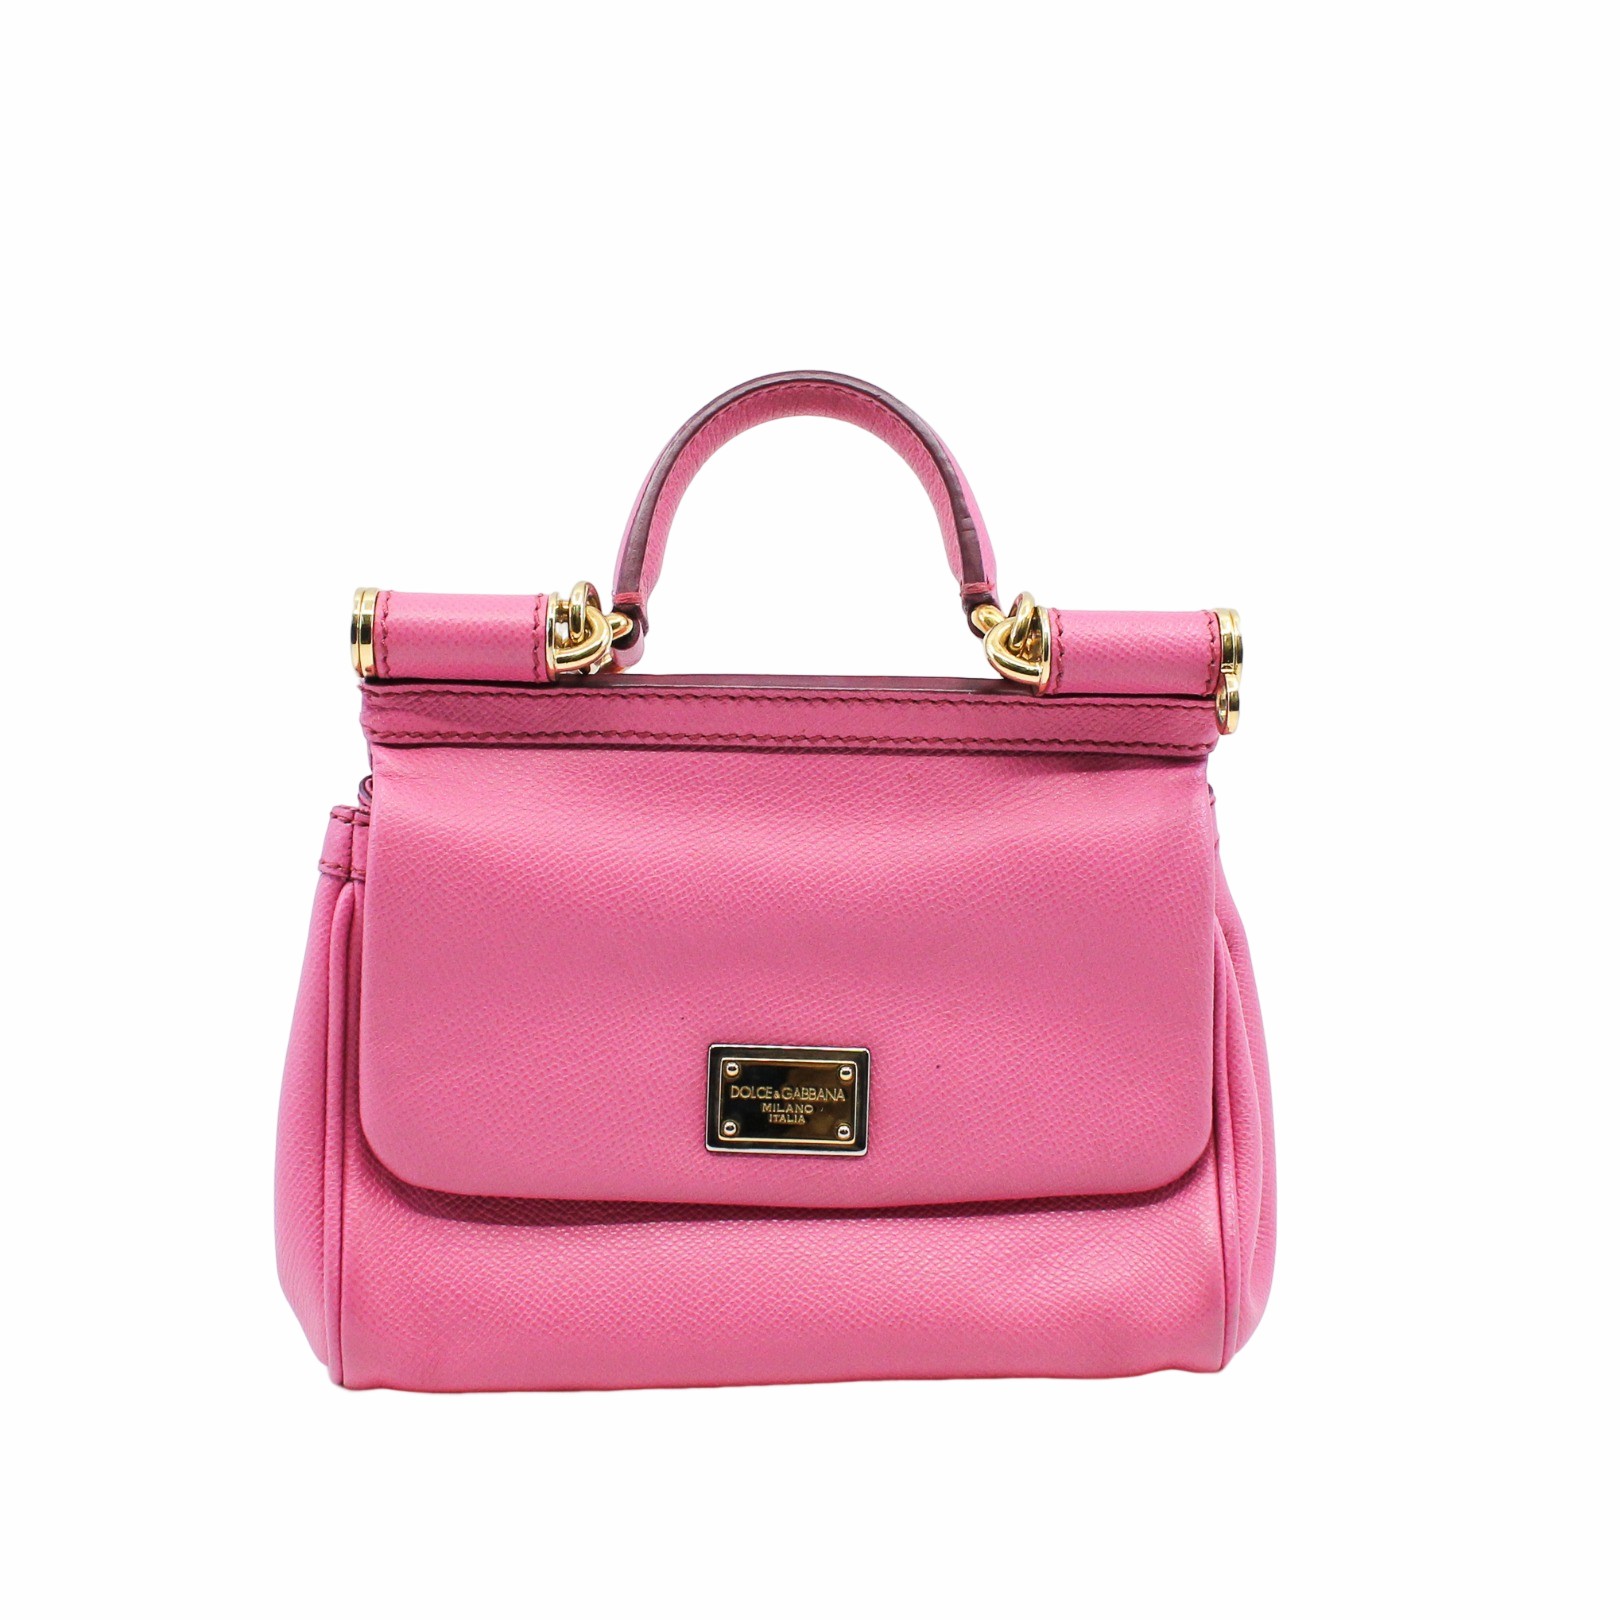 Dolce & Gabbana Authenticated Sicily Leather Handbag